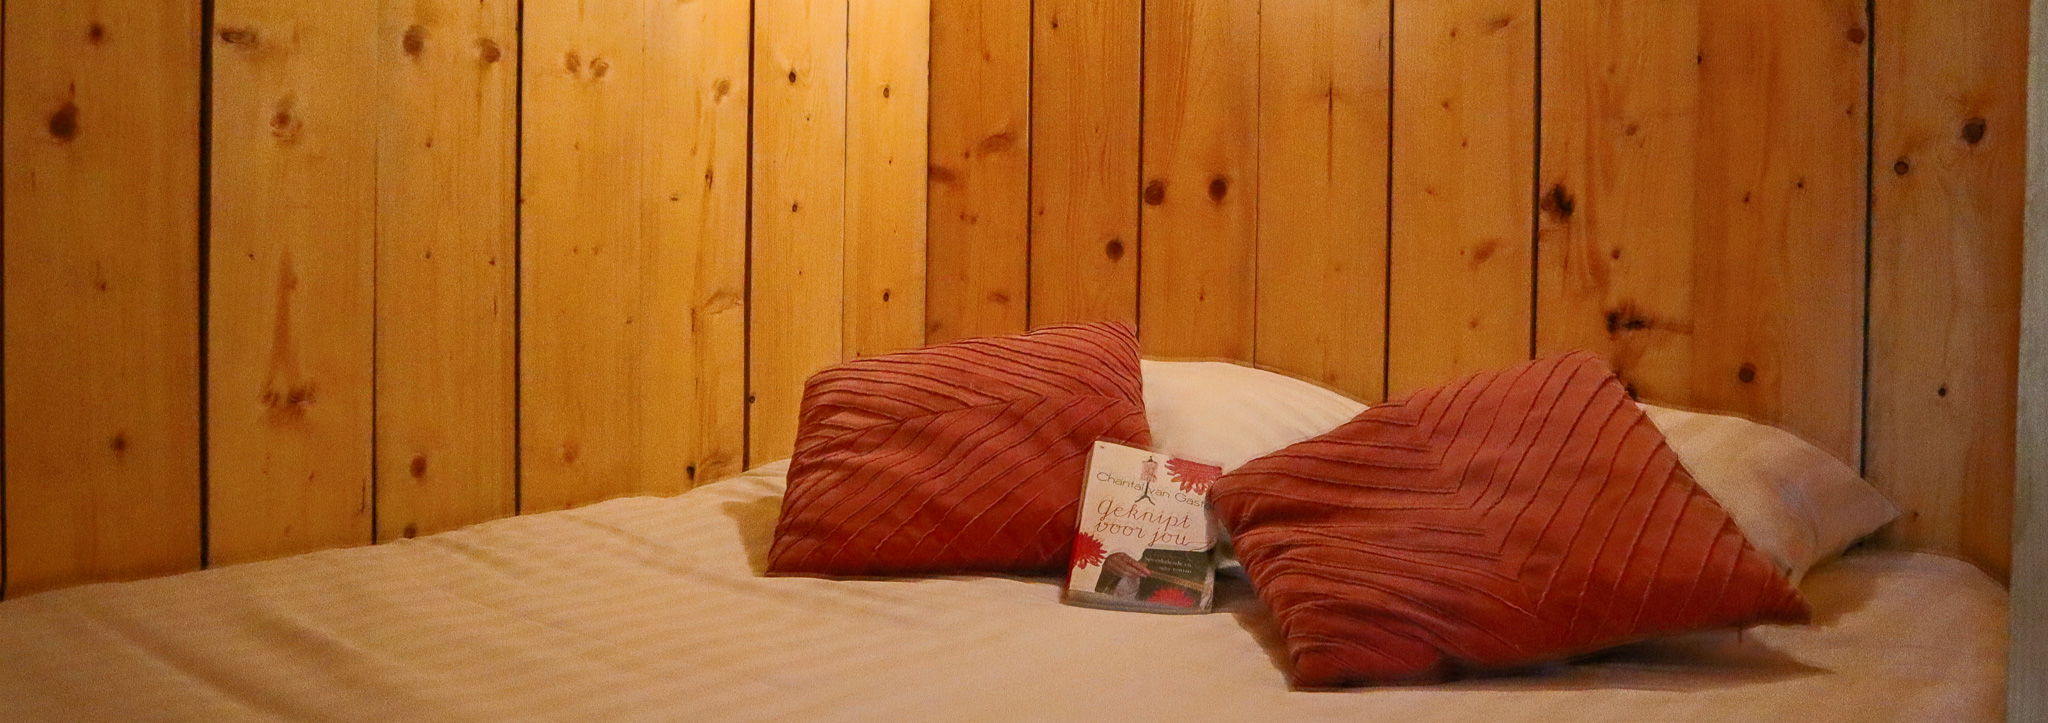 cozy bed for a romantic weekend getaway